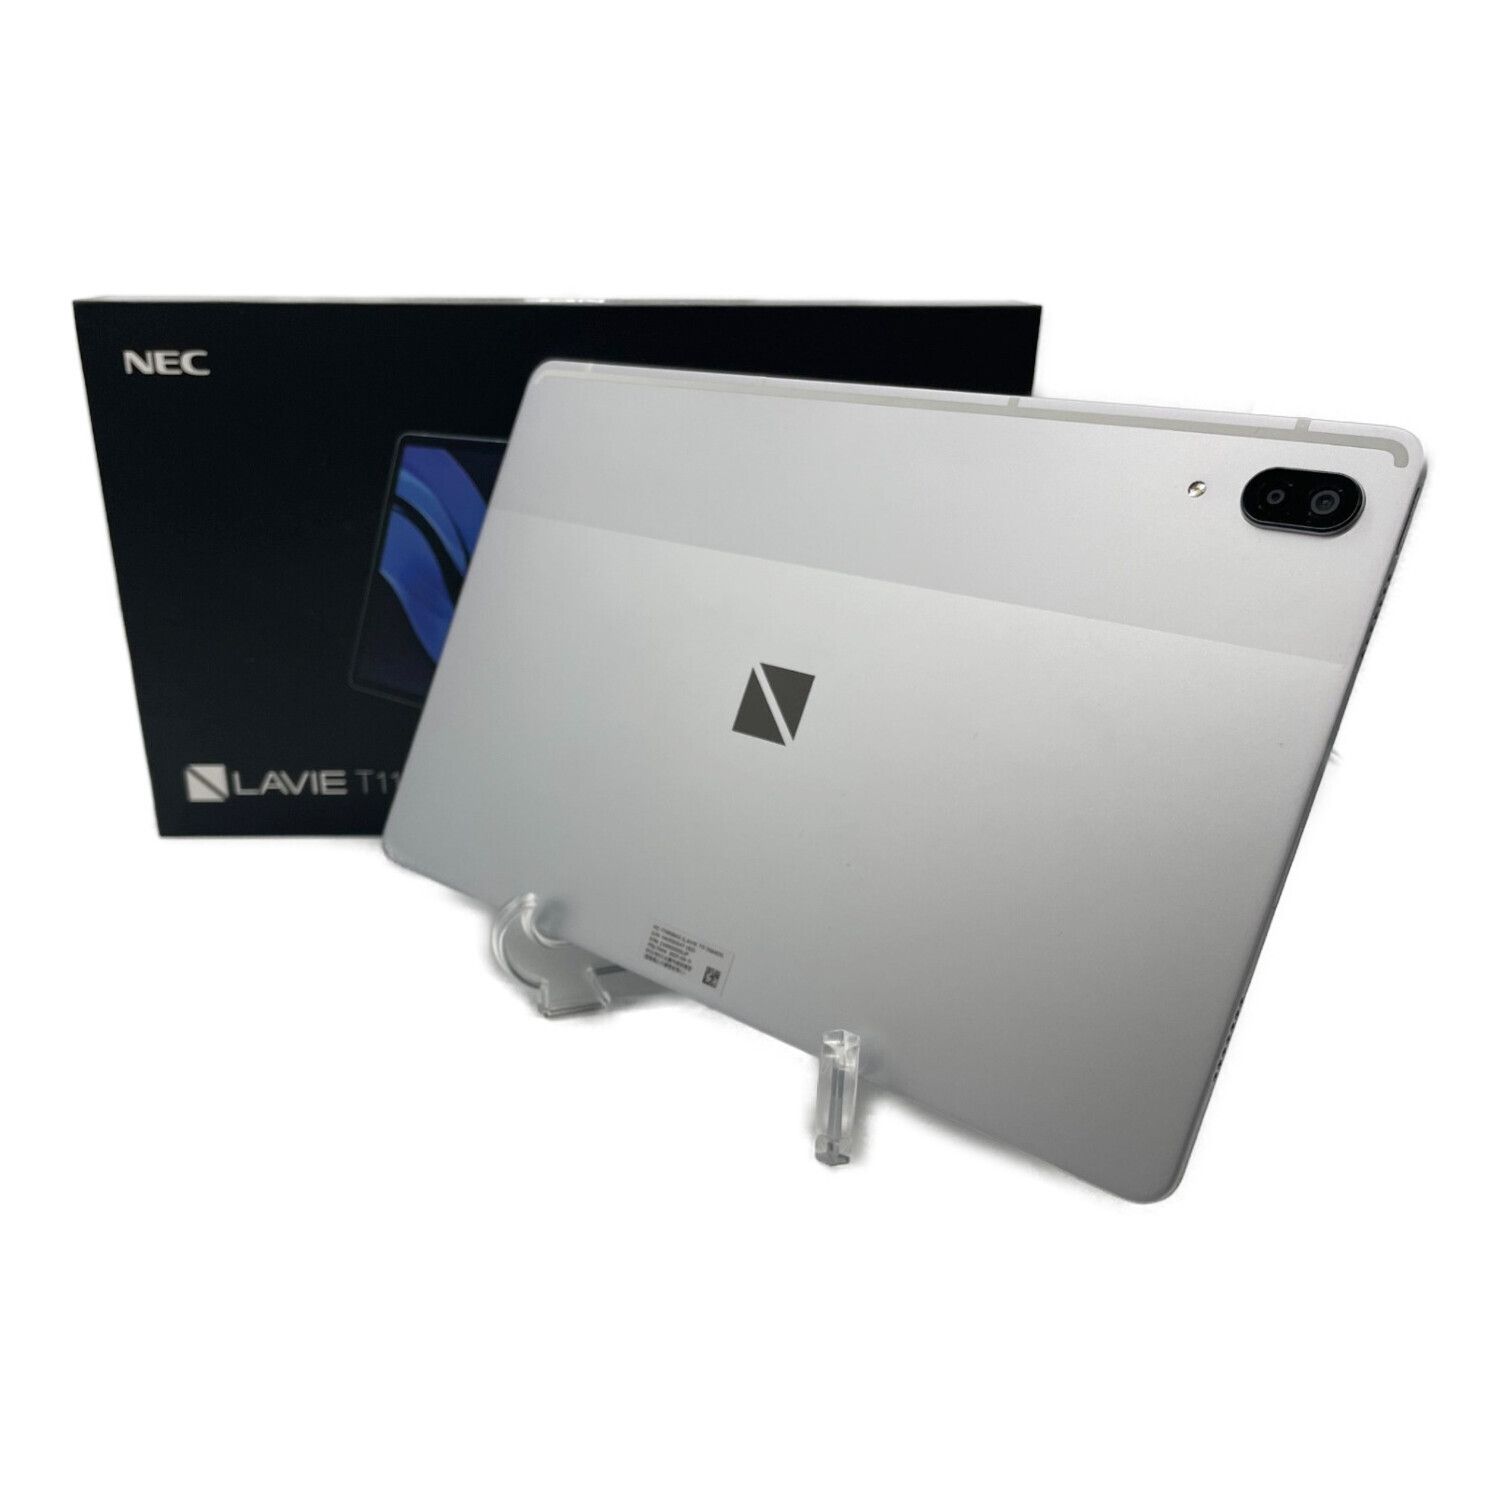 NEC (エヌイーシー) タブレット LAVIE T11 11QHD1 128GB Wi-Fiモデル ...